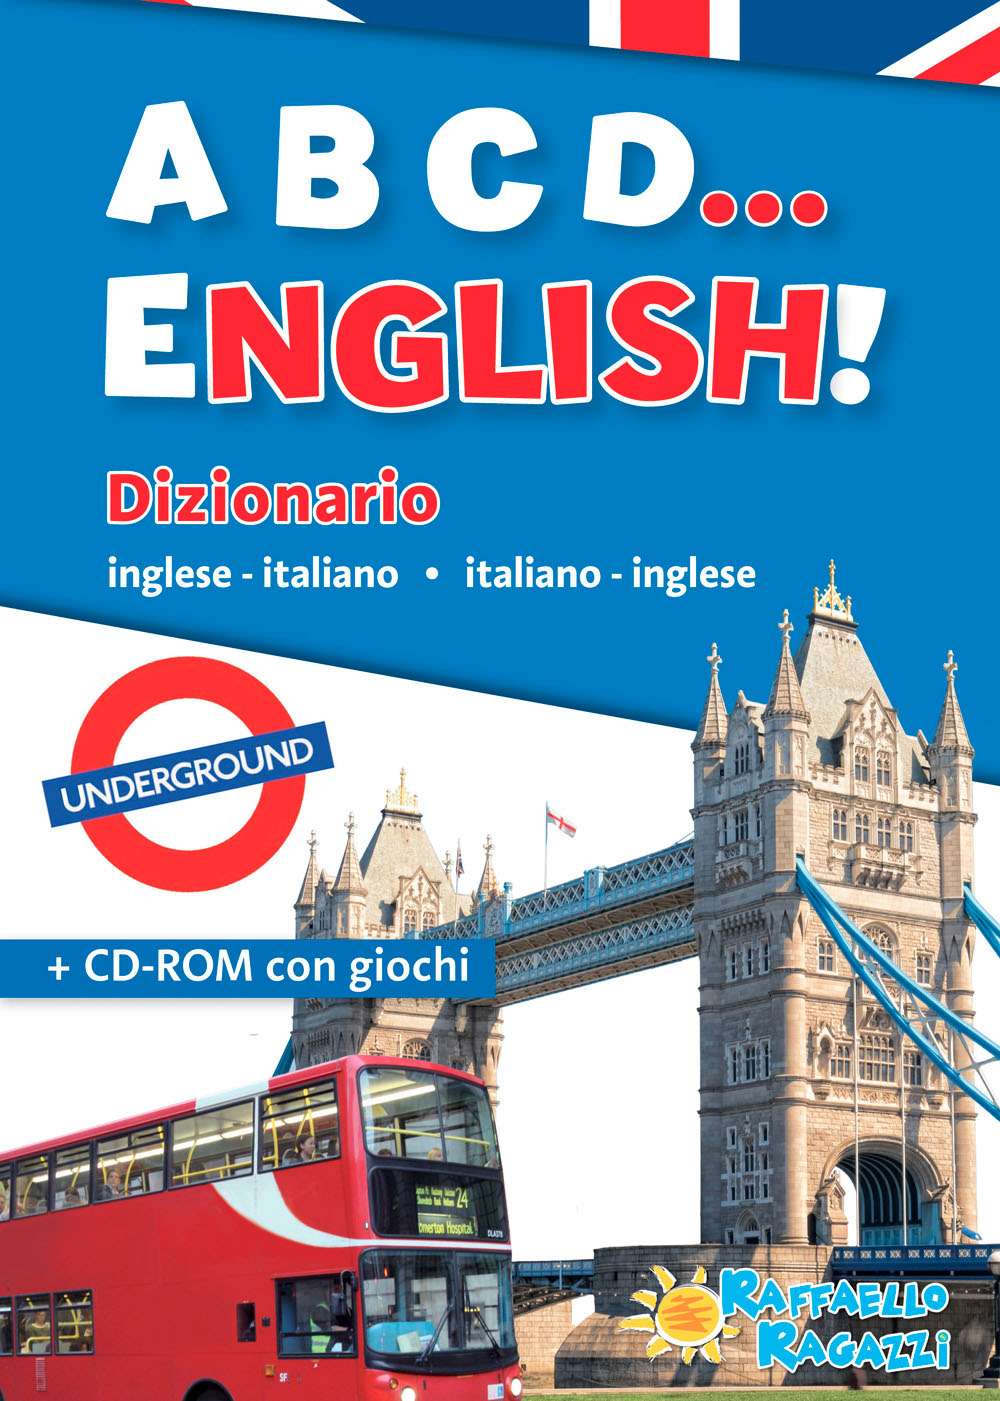 ABCD English! - Raffaello Ragazzi